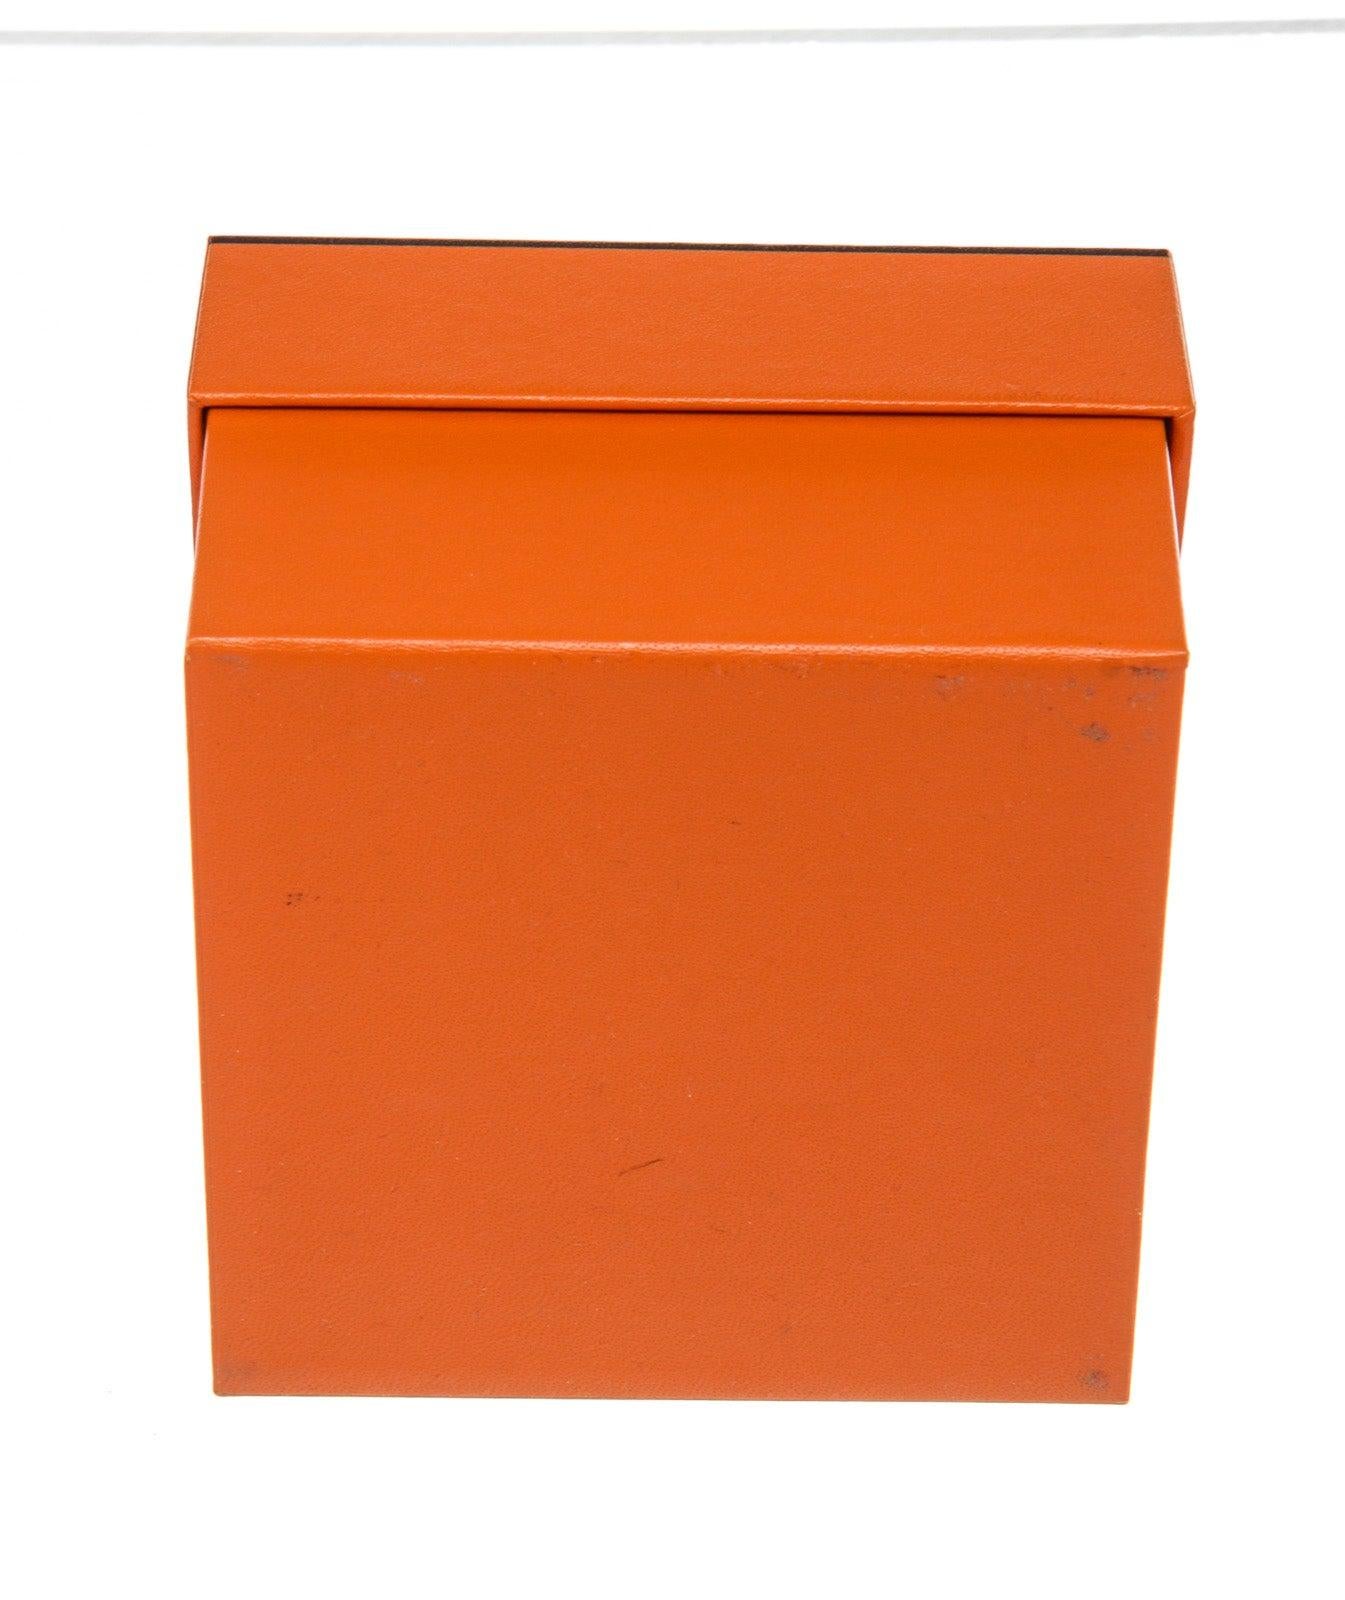 hermes orange boxes